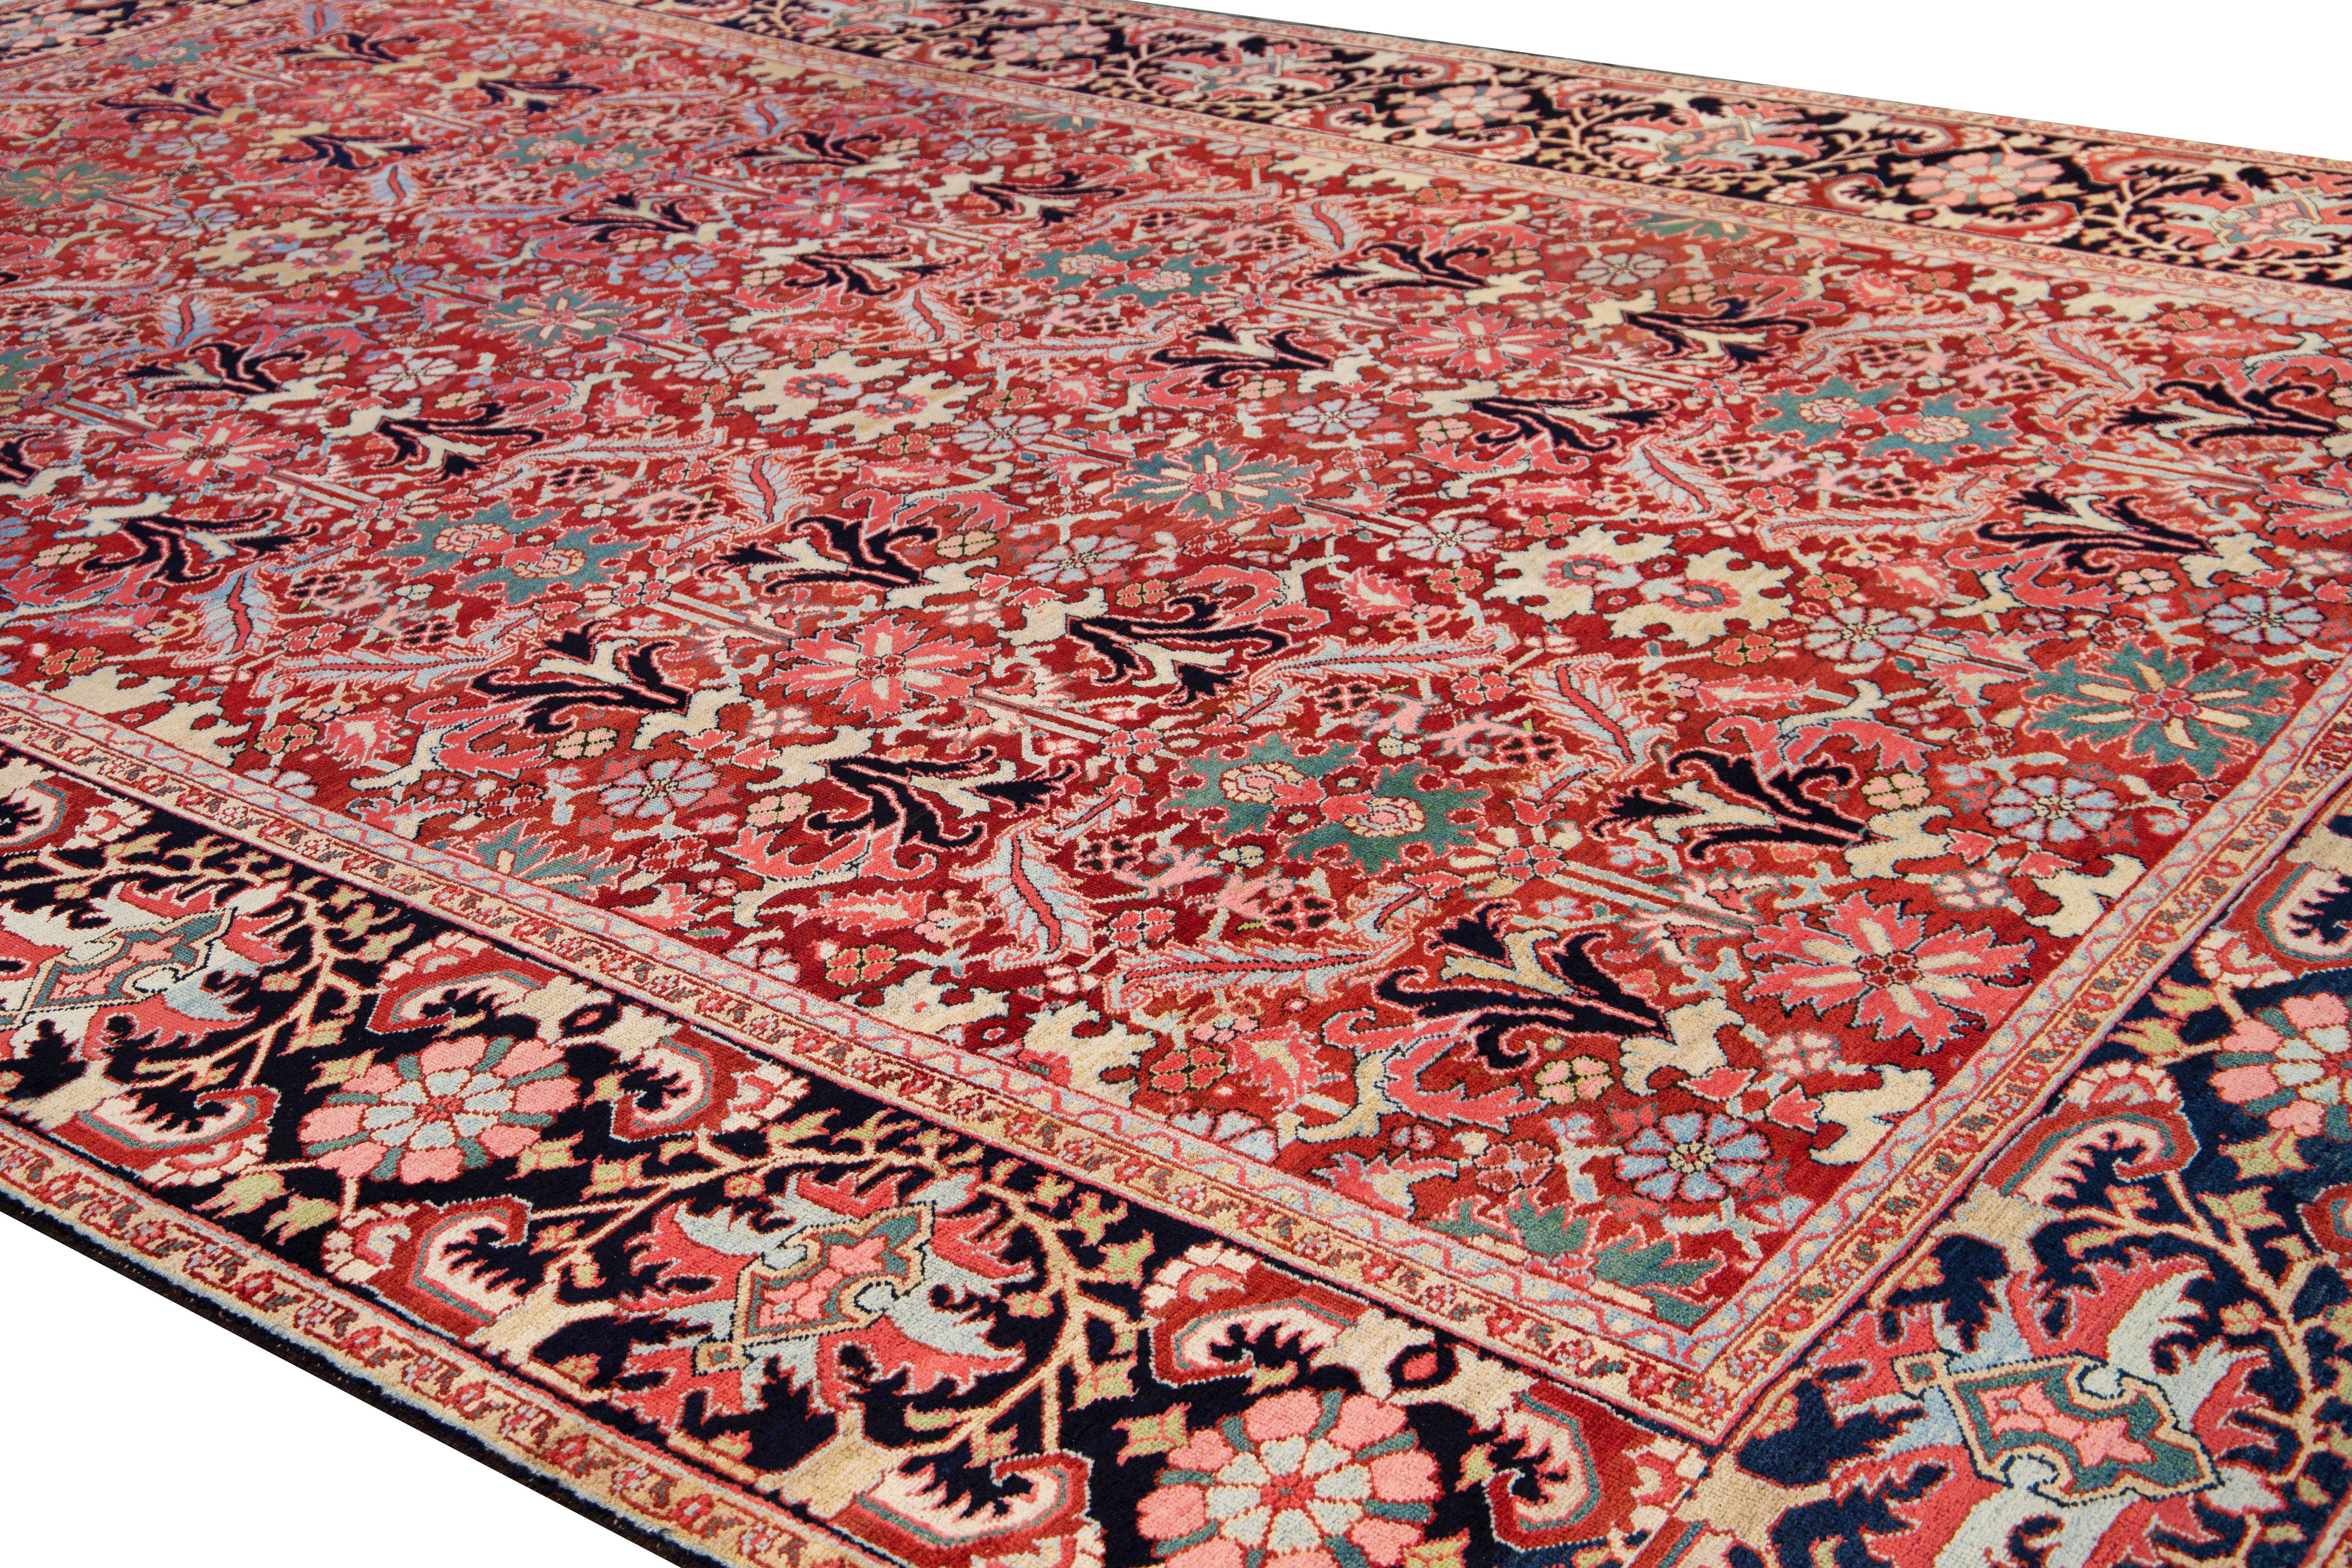 Antique Persian Heriz Handmade Multicolor Floral Designed Red Oversize Wool Rug For Sale 1